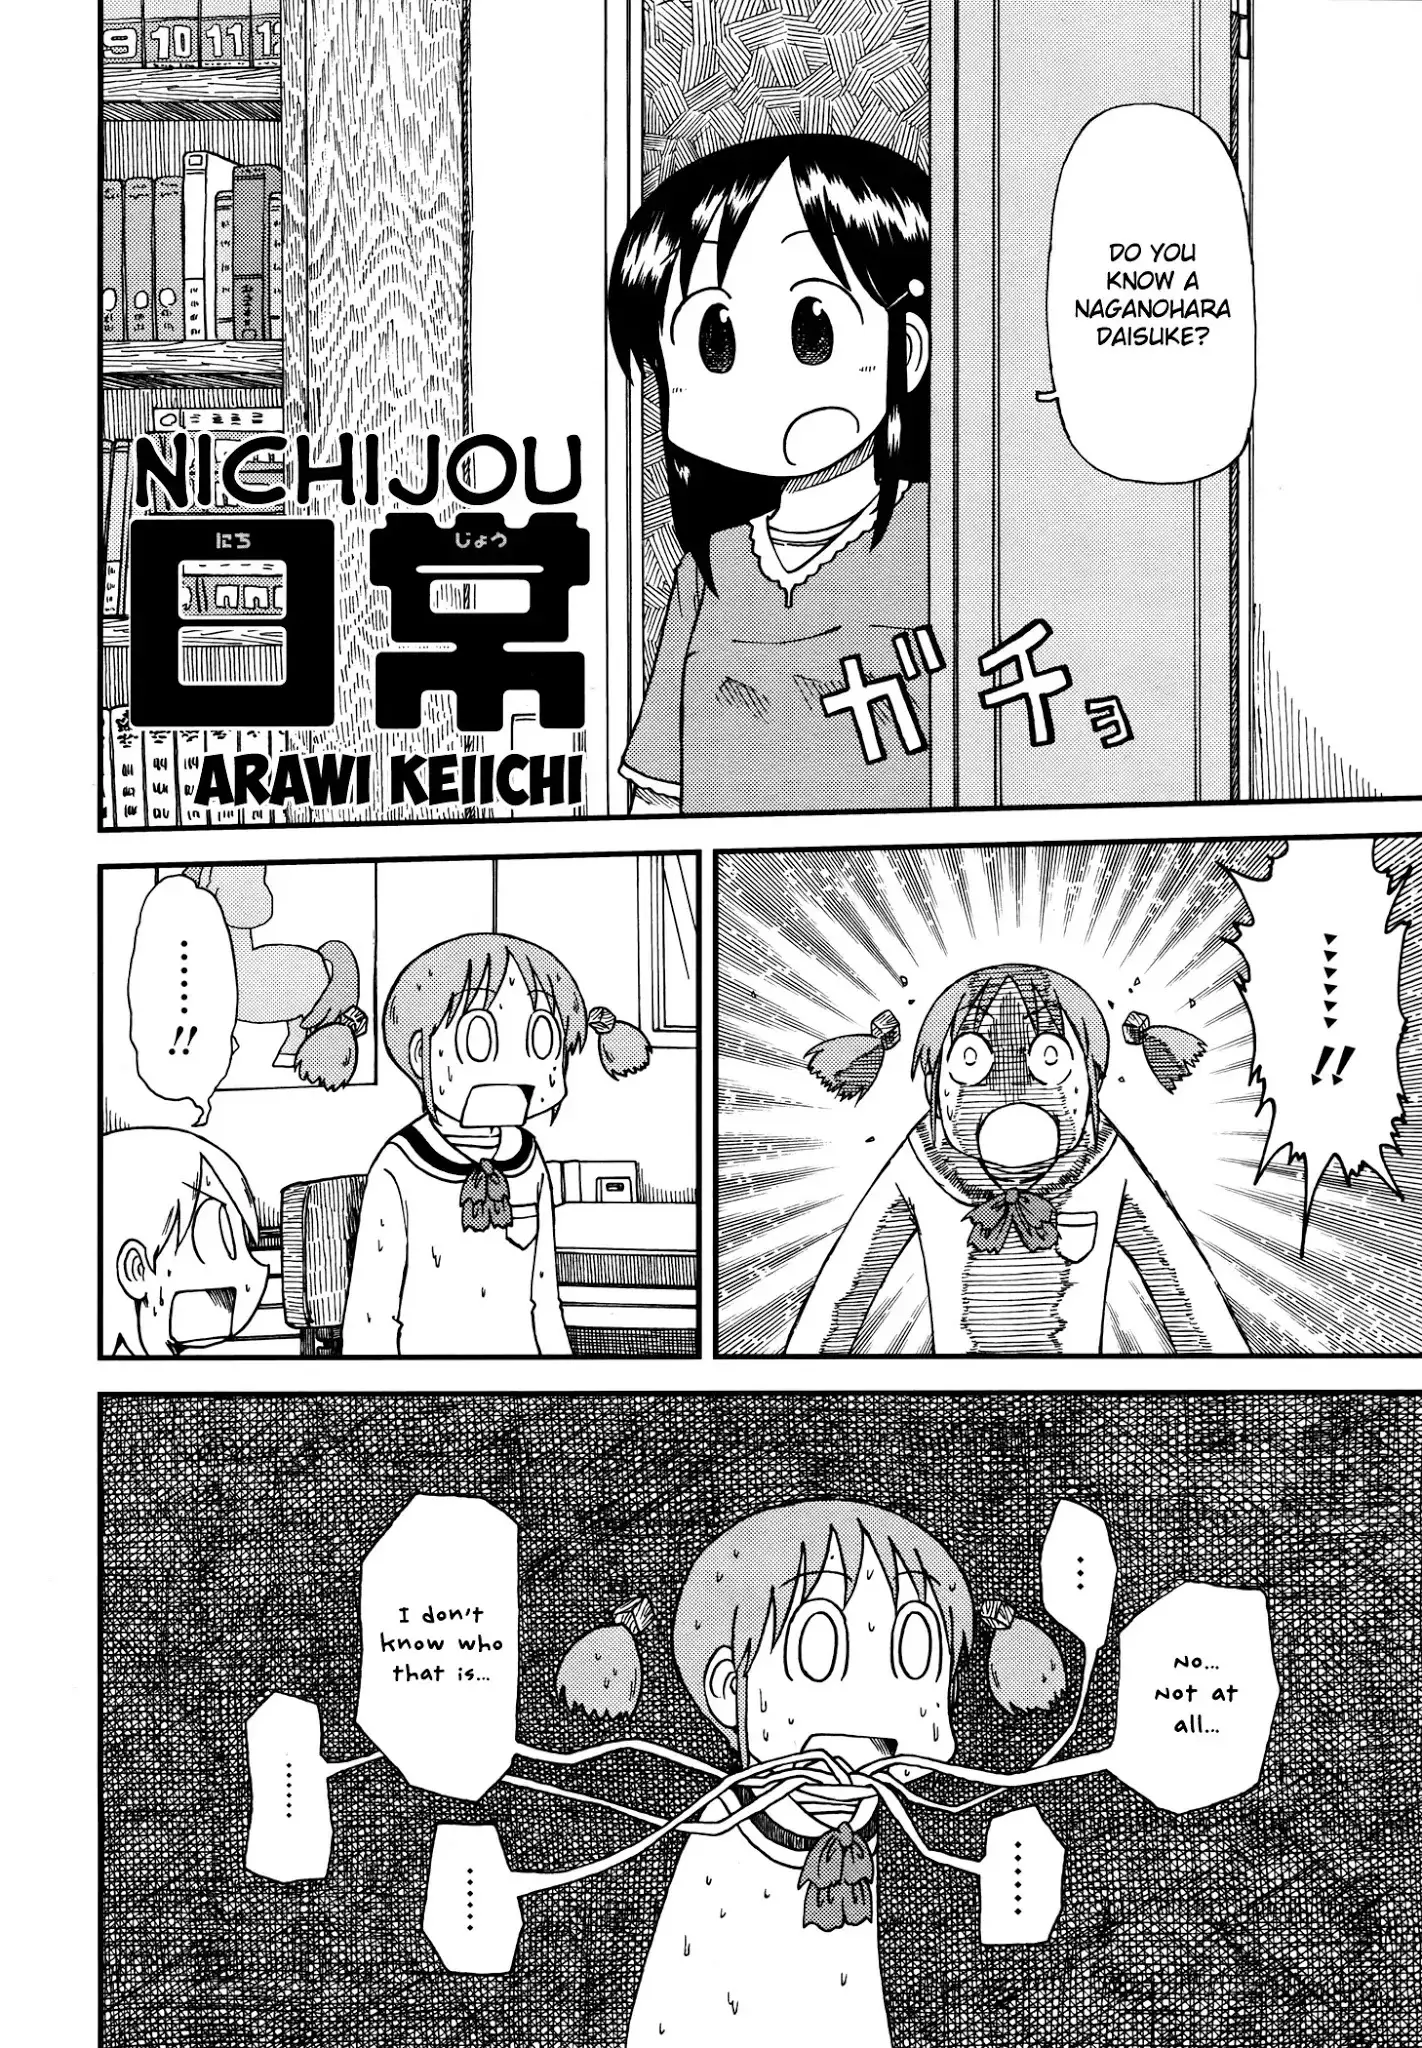 Nichijou - 172.03 page 2-90264fea